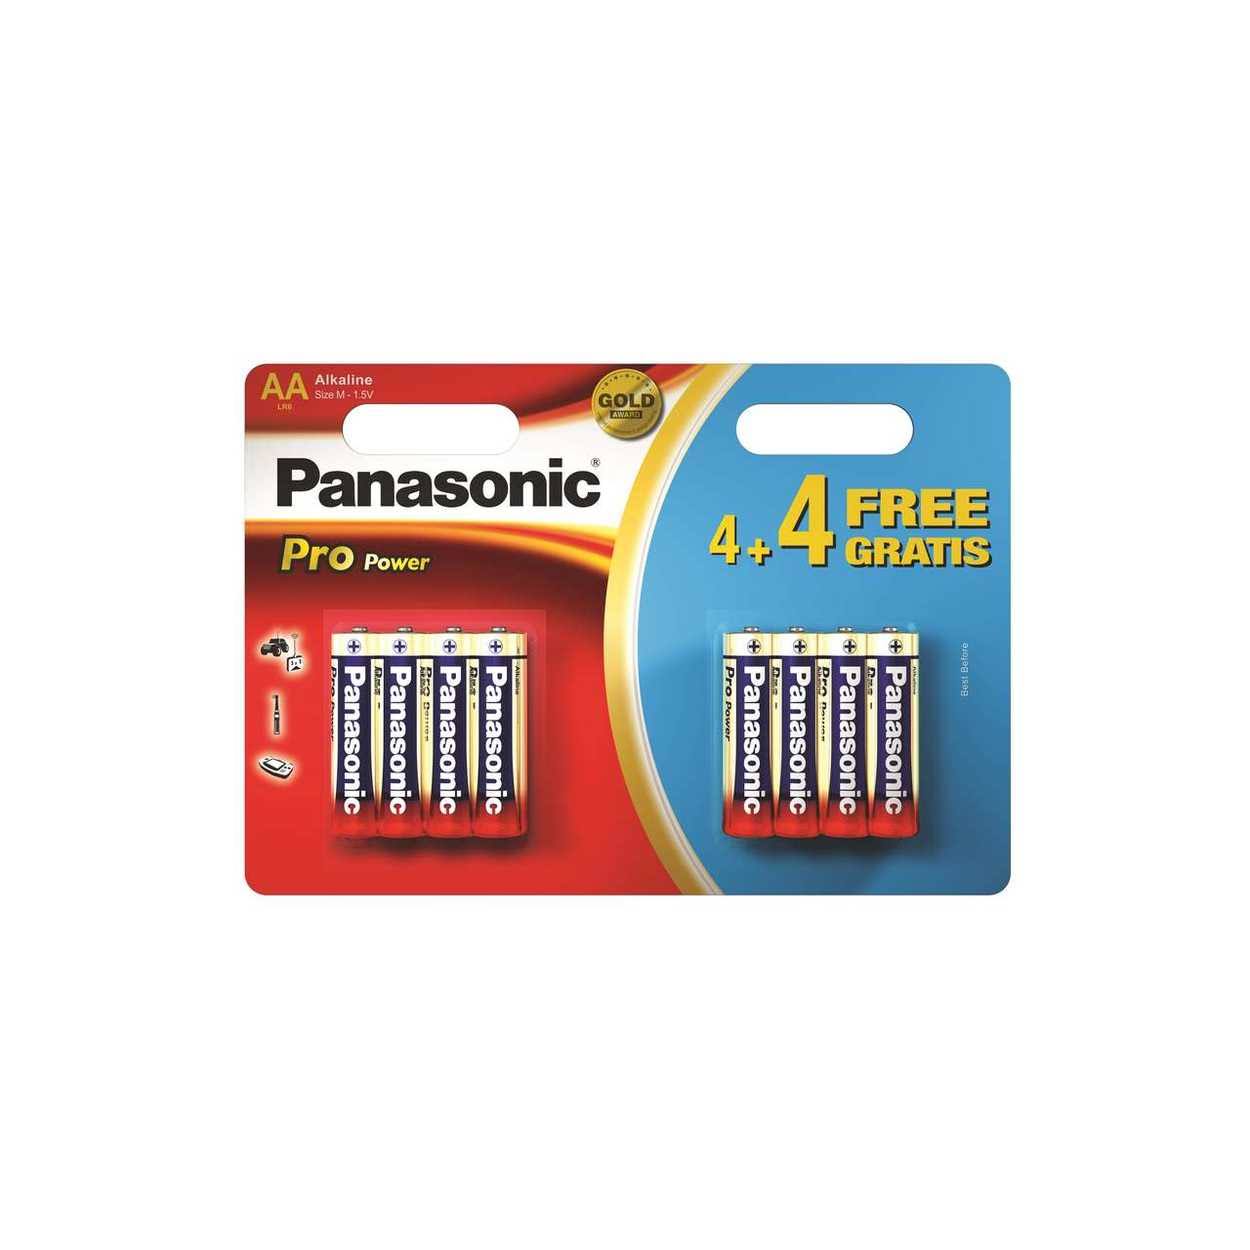 Panasonic Pro Power Advanced Long Lasting Energy AA Batteries - 8pk